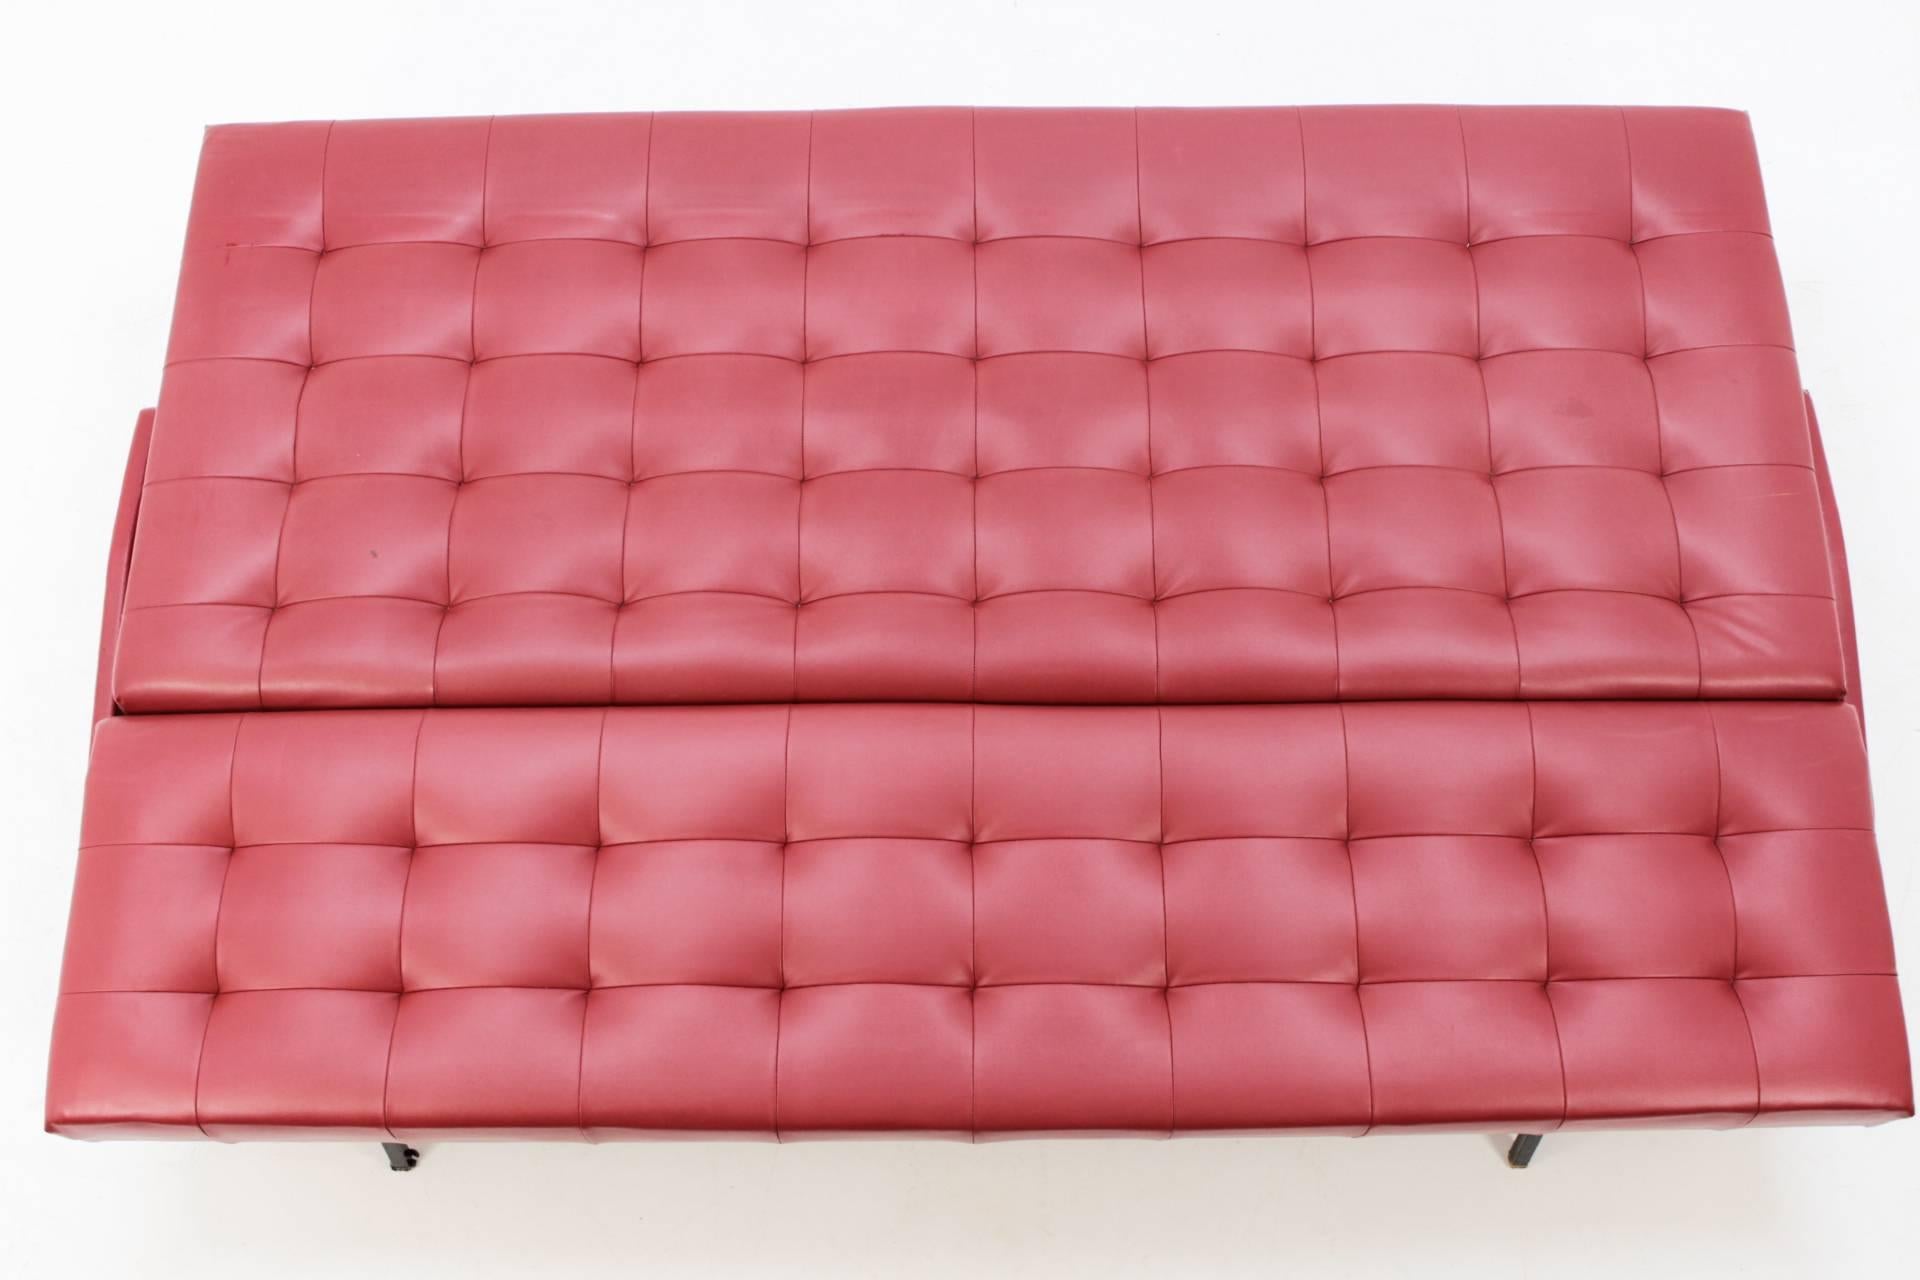 Czech Midcentury Folding Design Sofa, Studio Couch For Sale